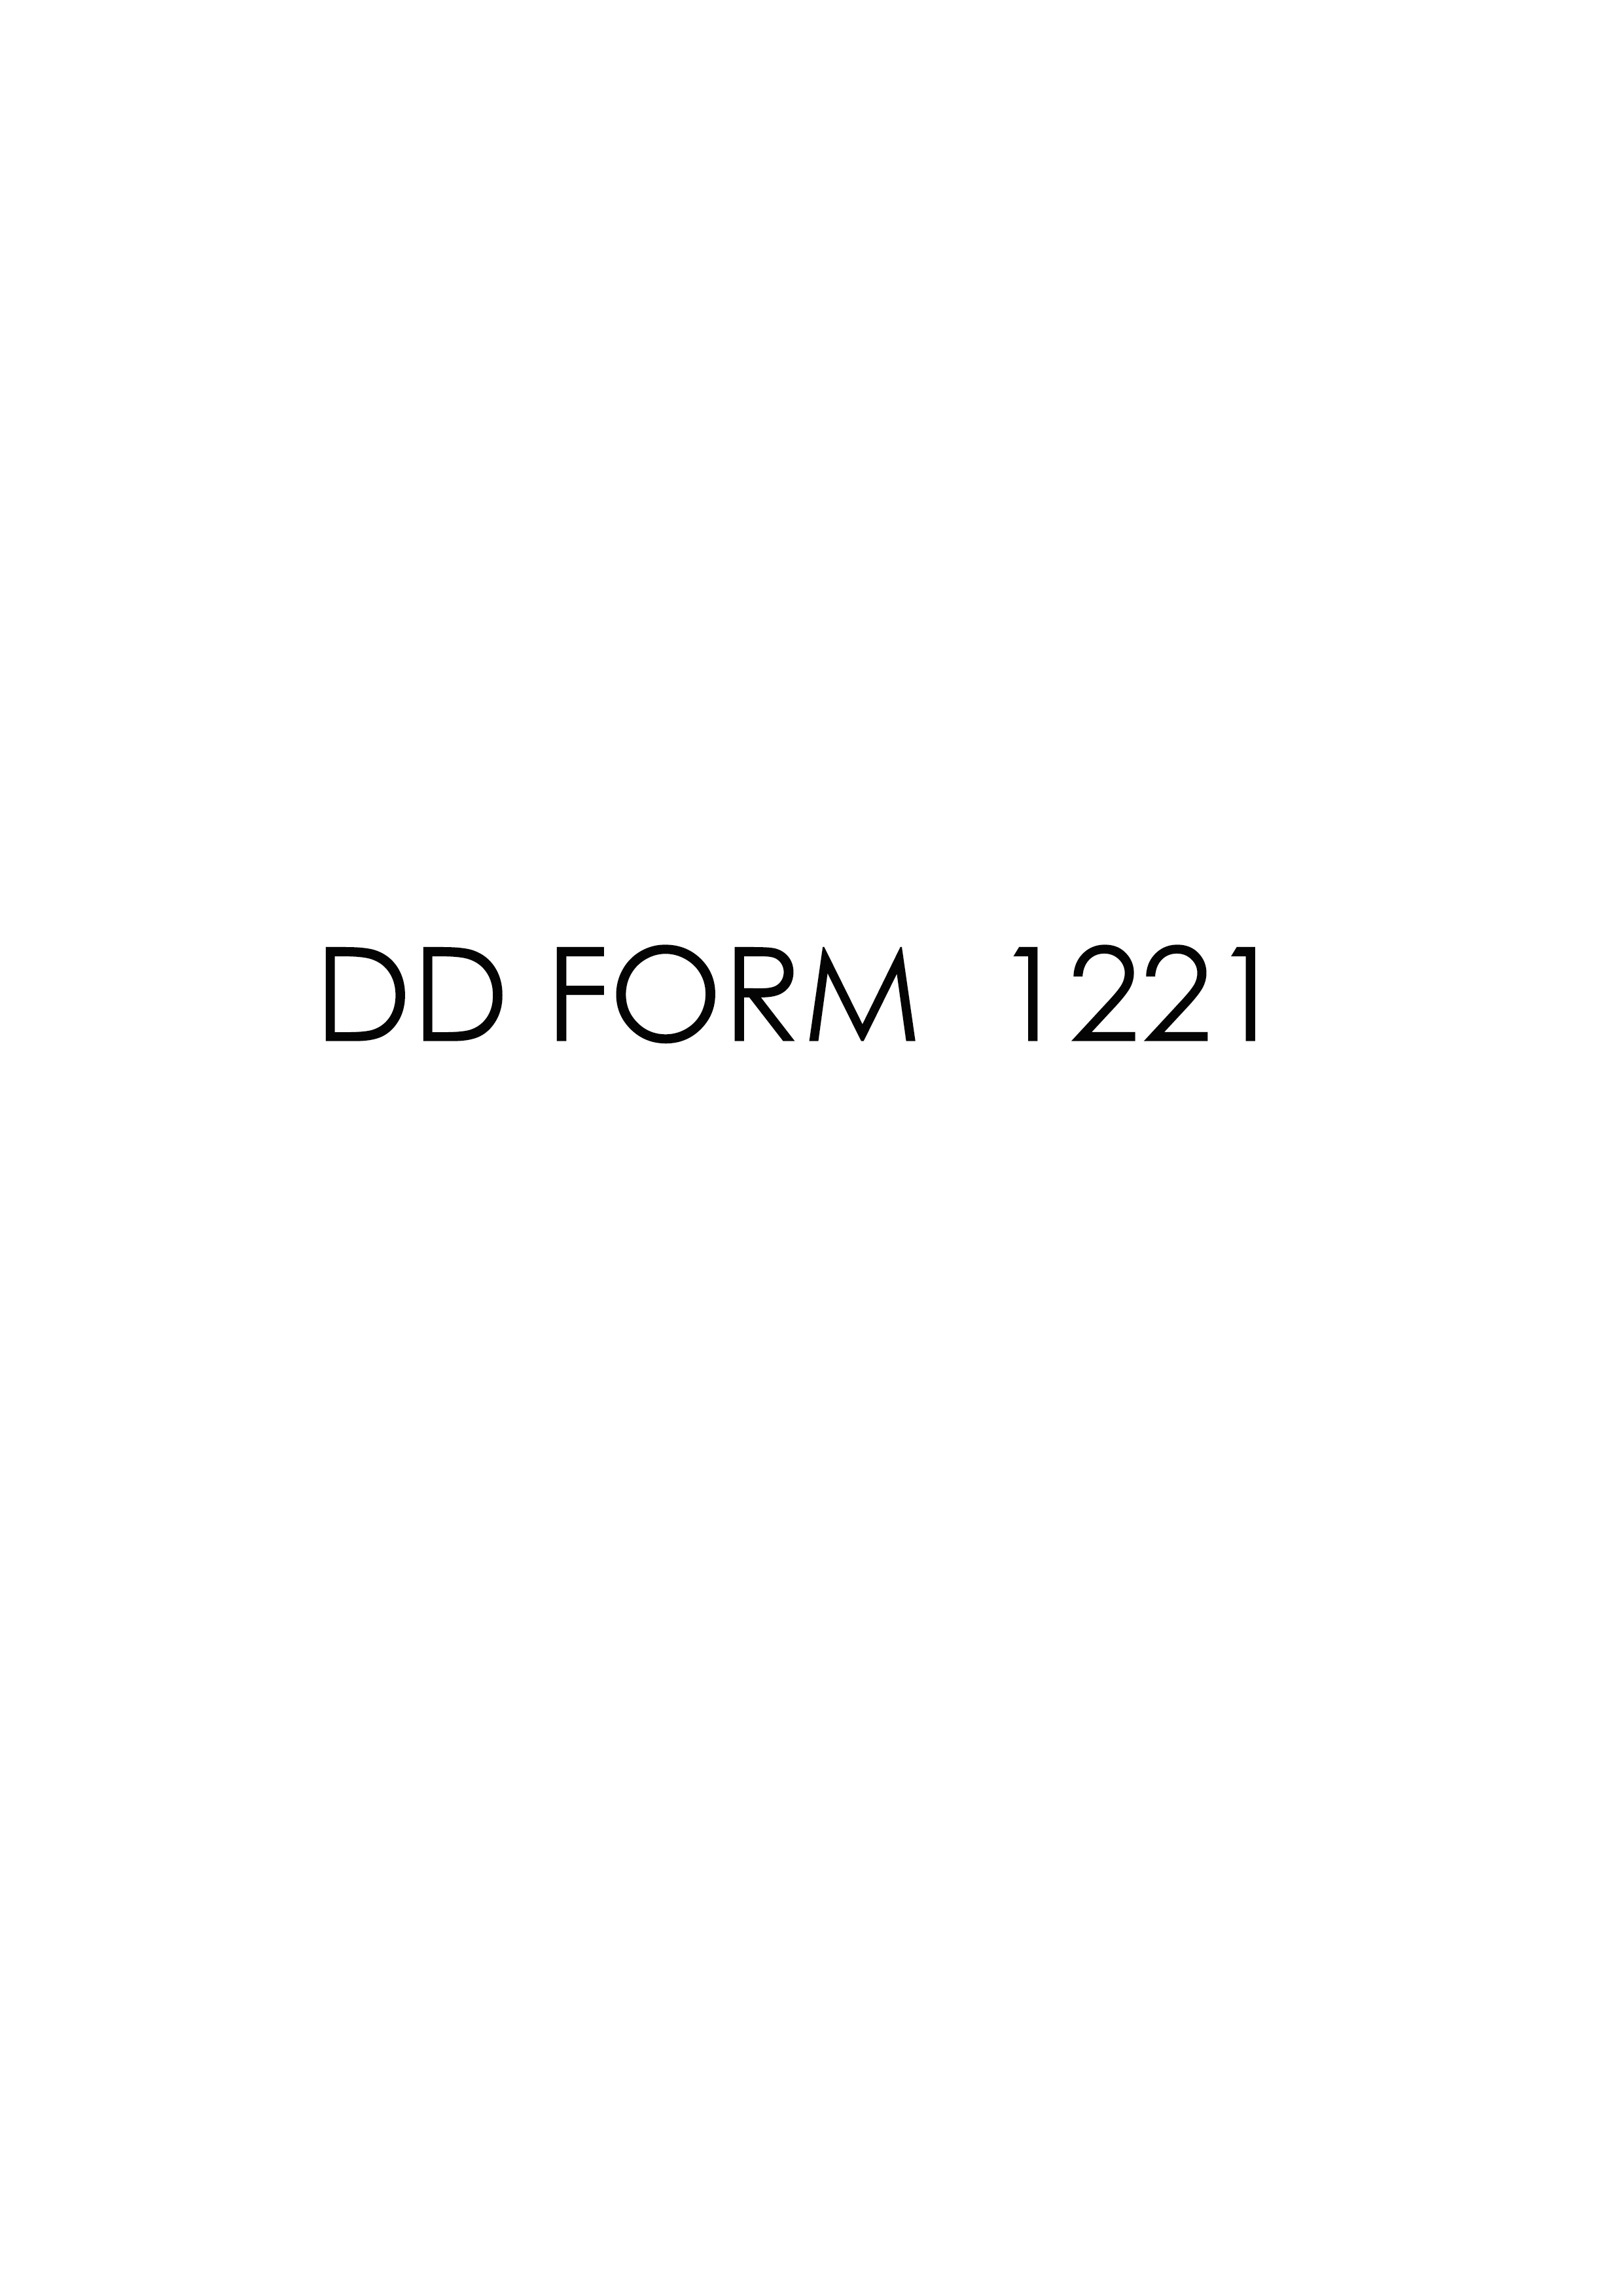 Download dd 1221 Form